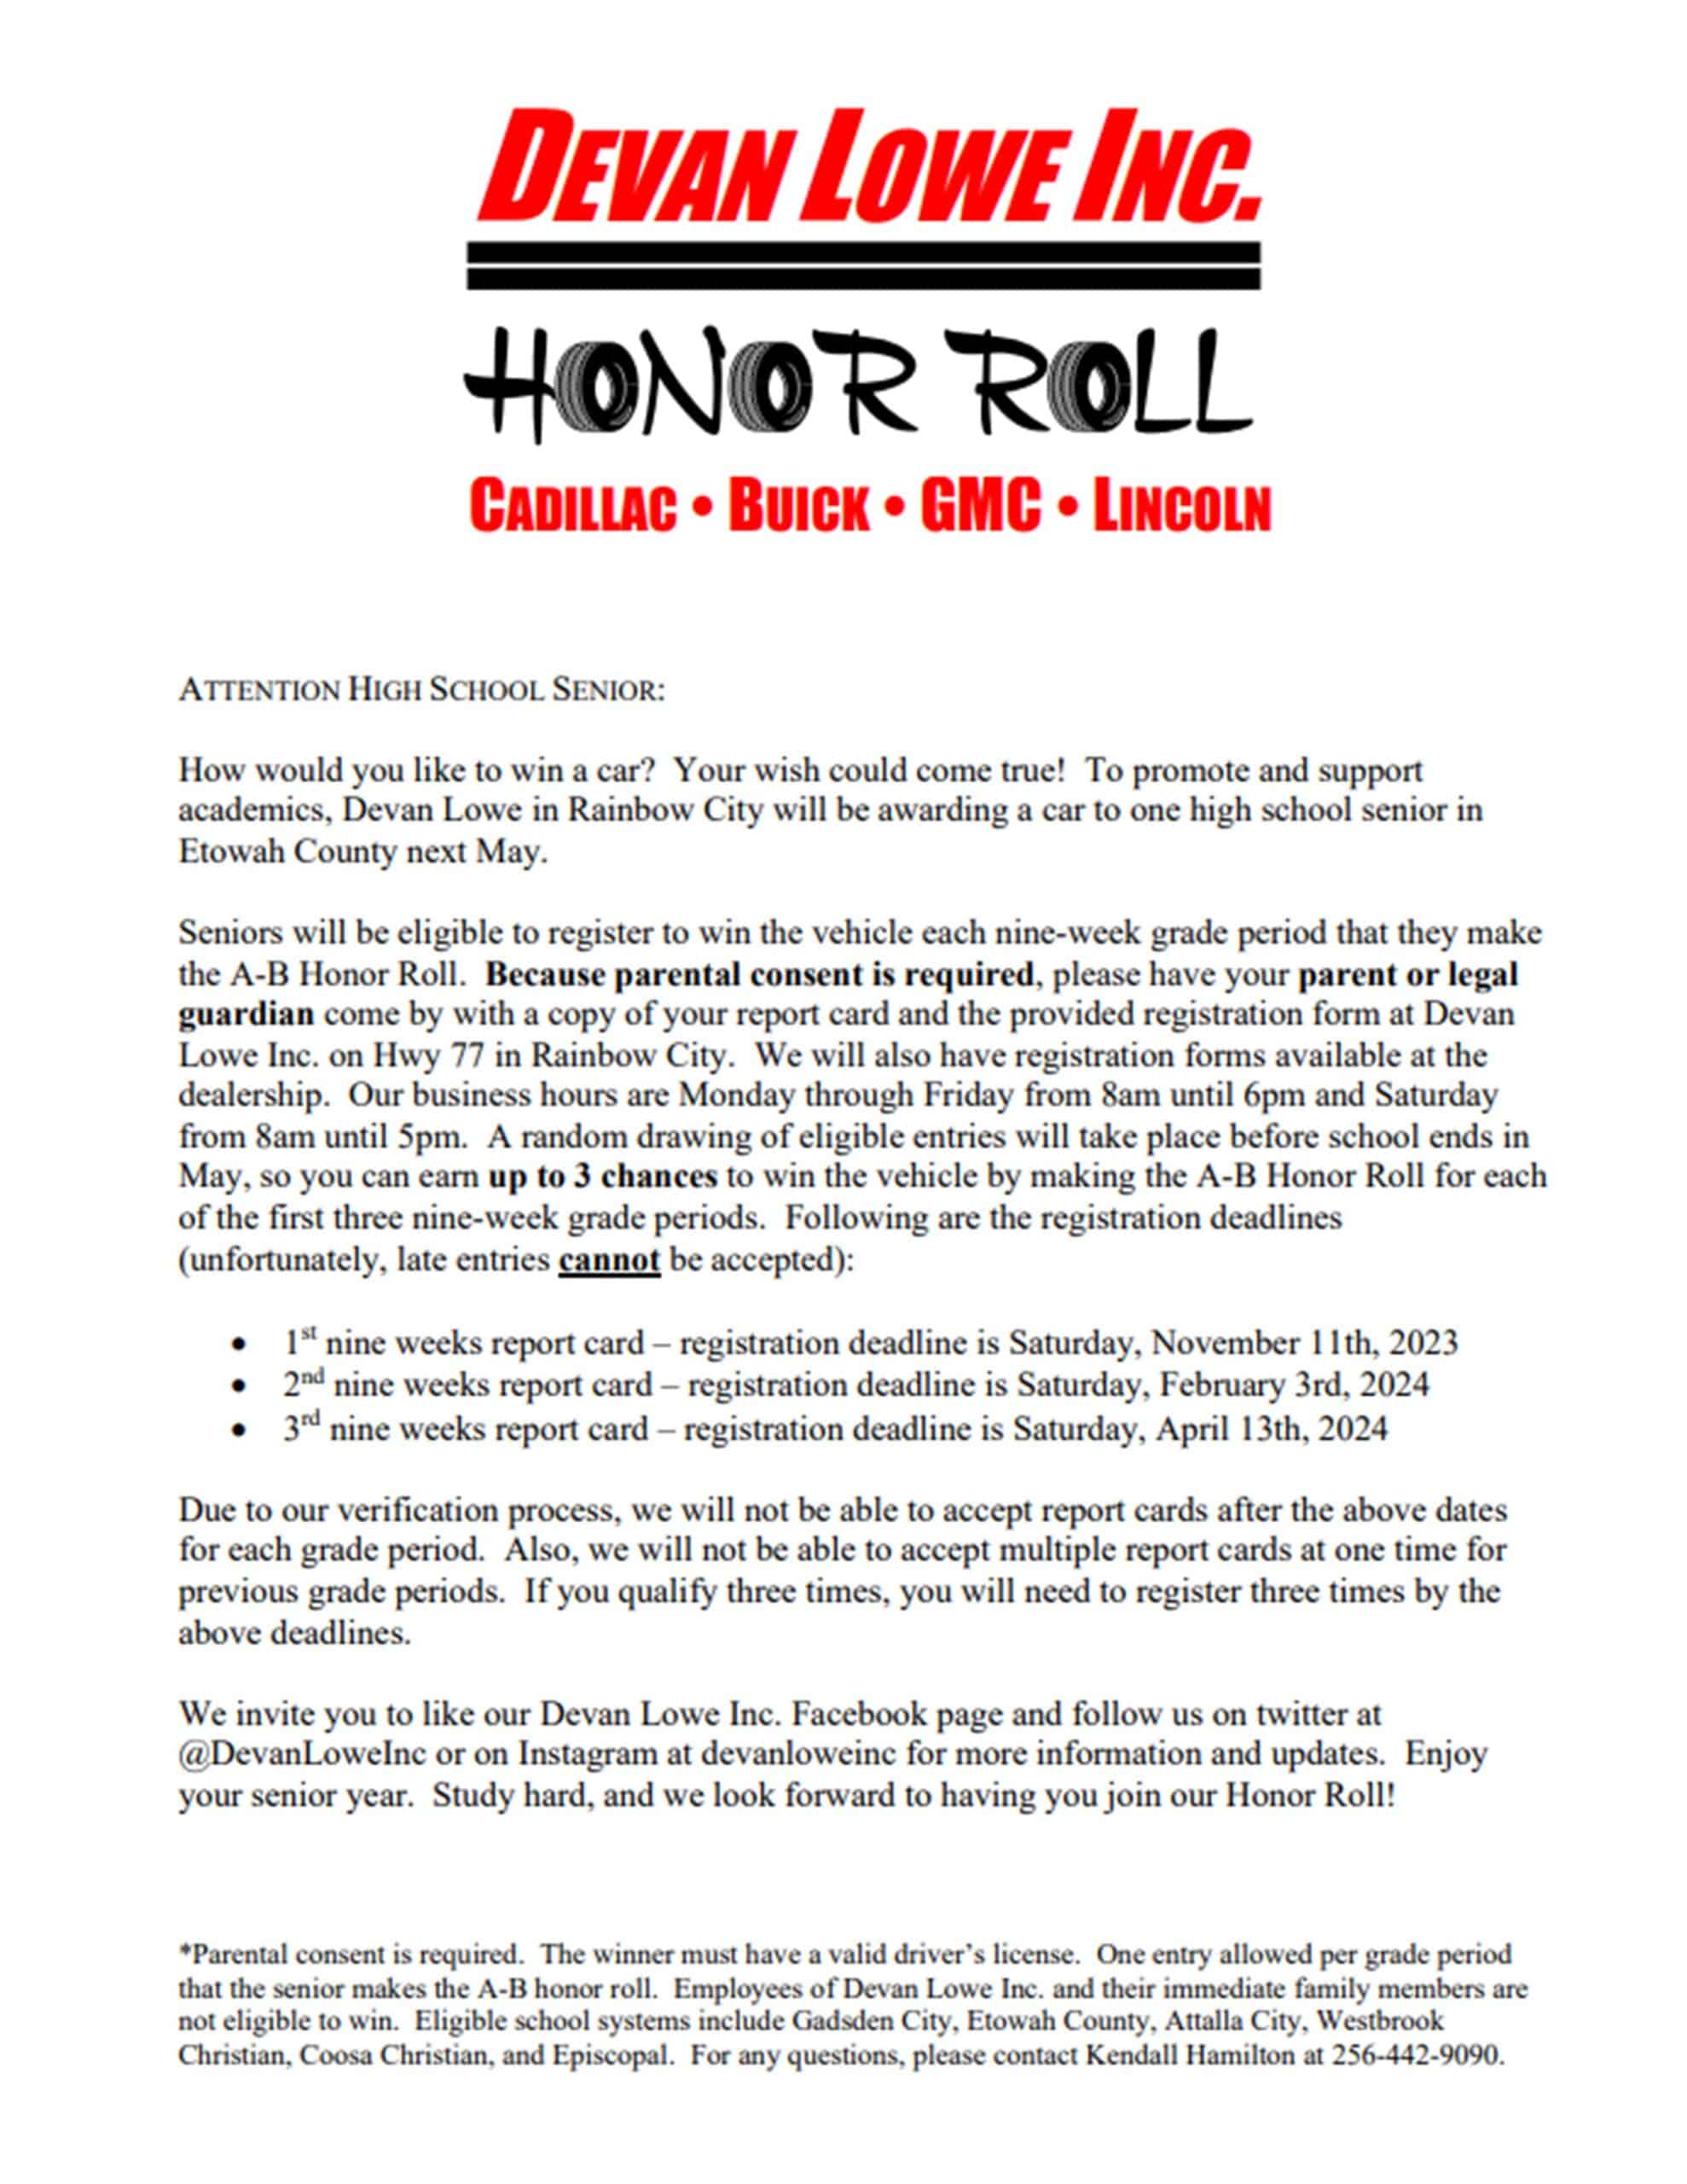 Devan Lowe Honor Roll Announcement